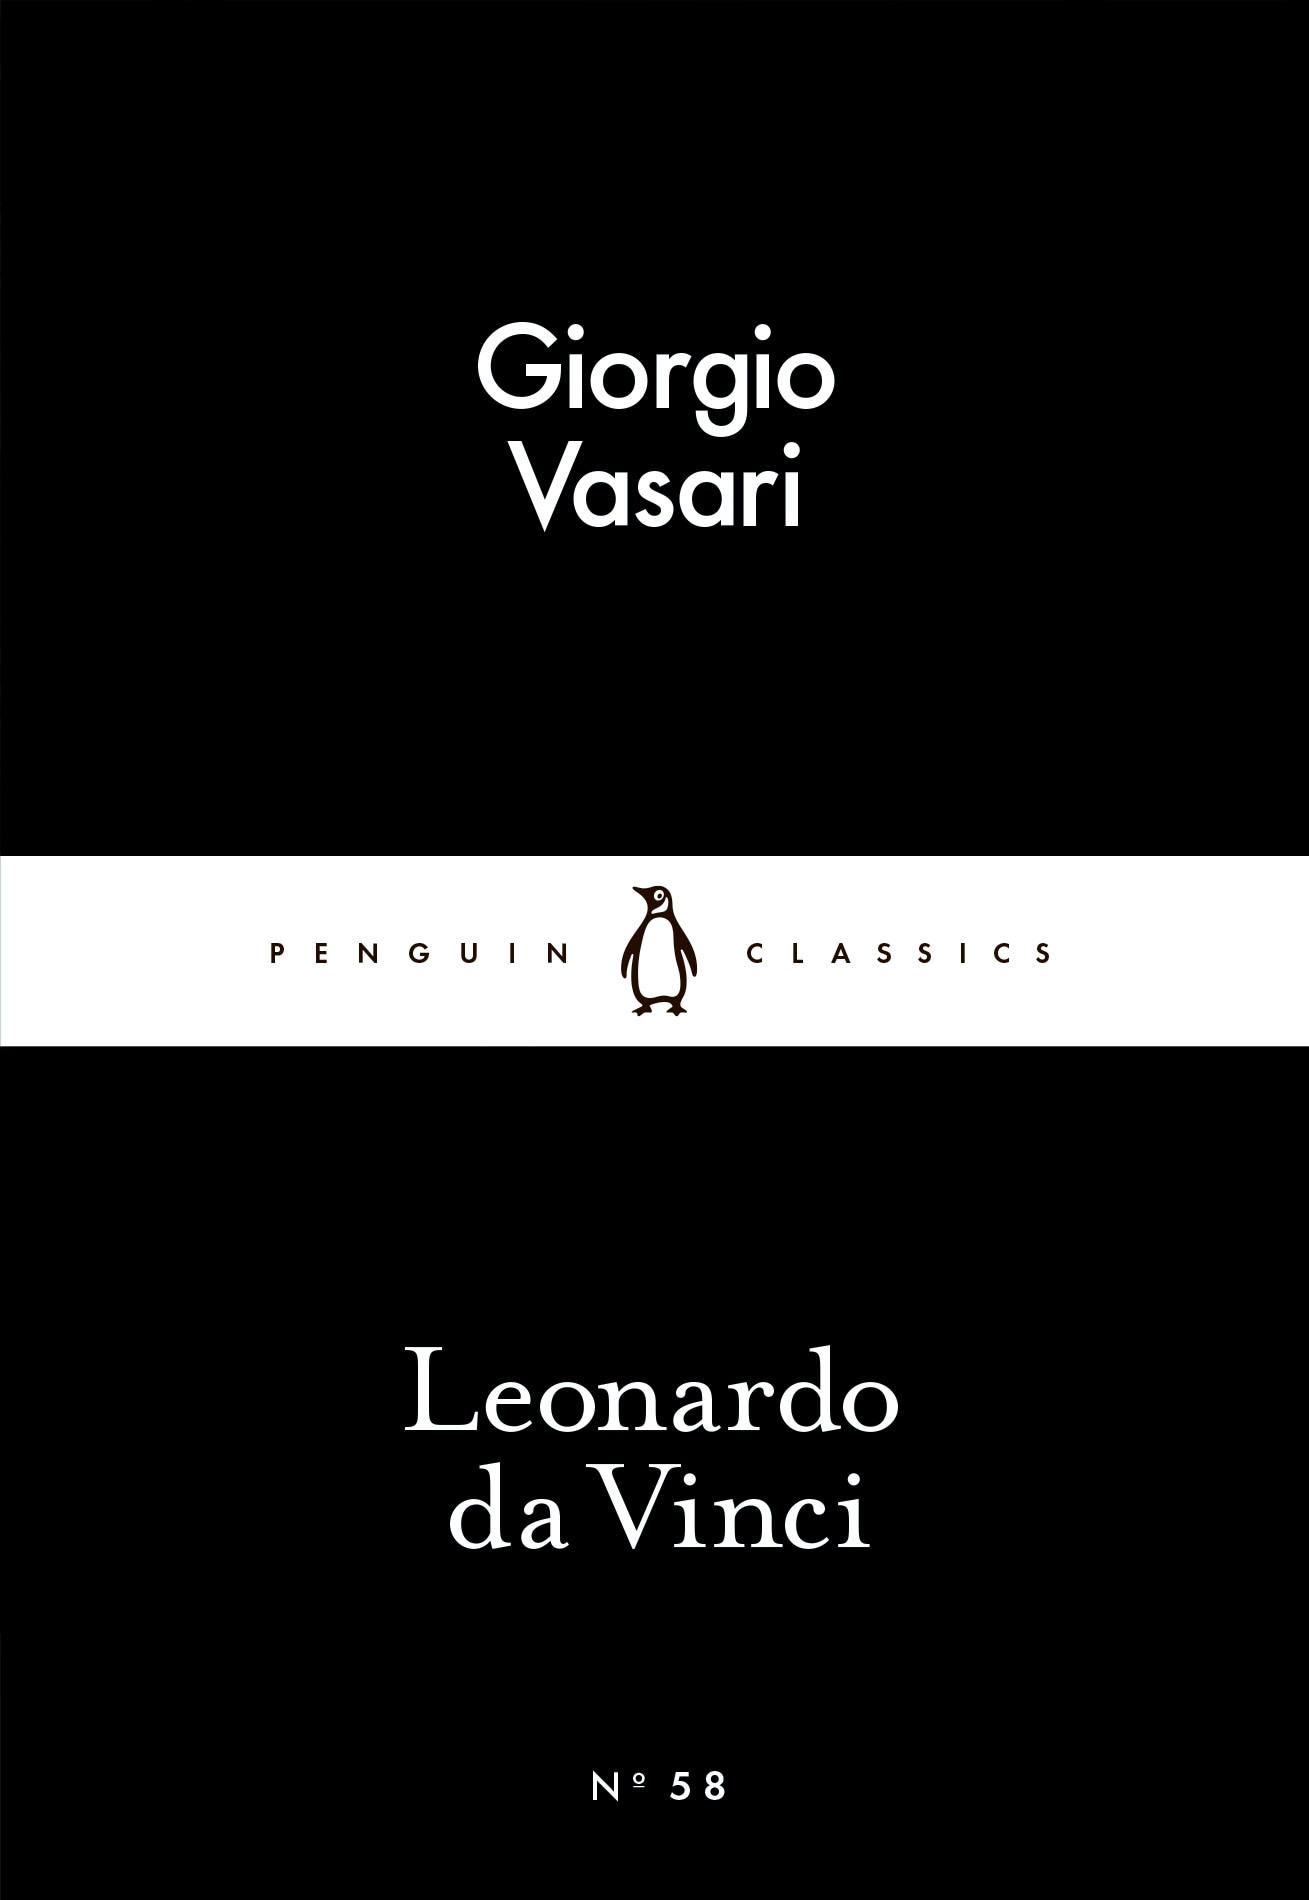 Book “Leonardo da Vinci” by Giorgio Vasari — February 26, 2015